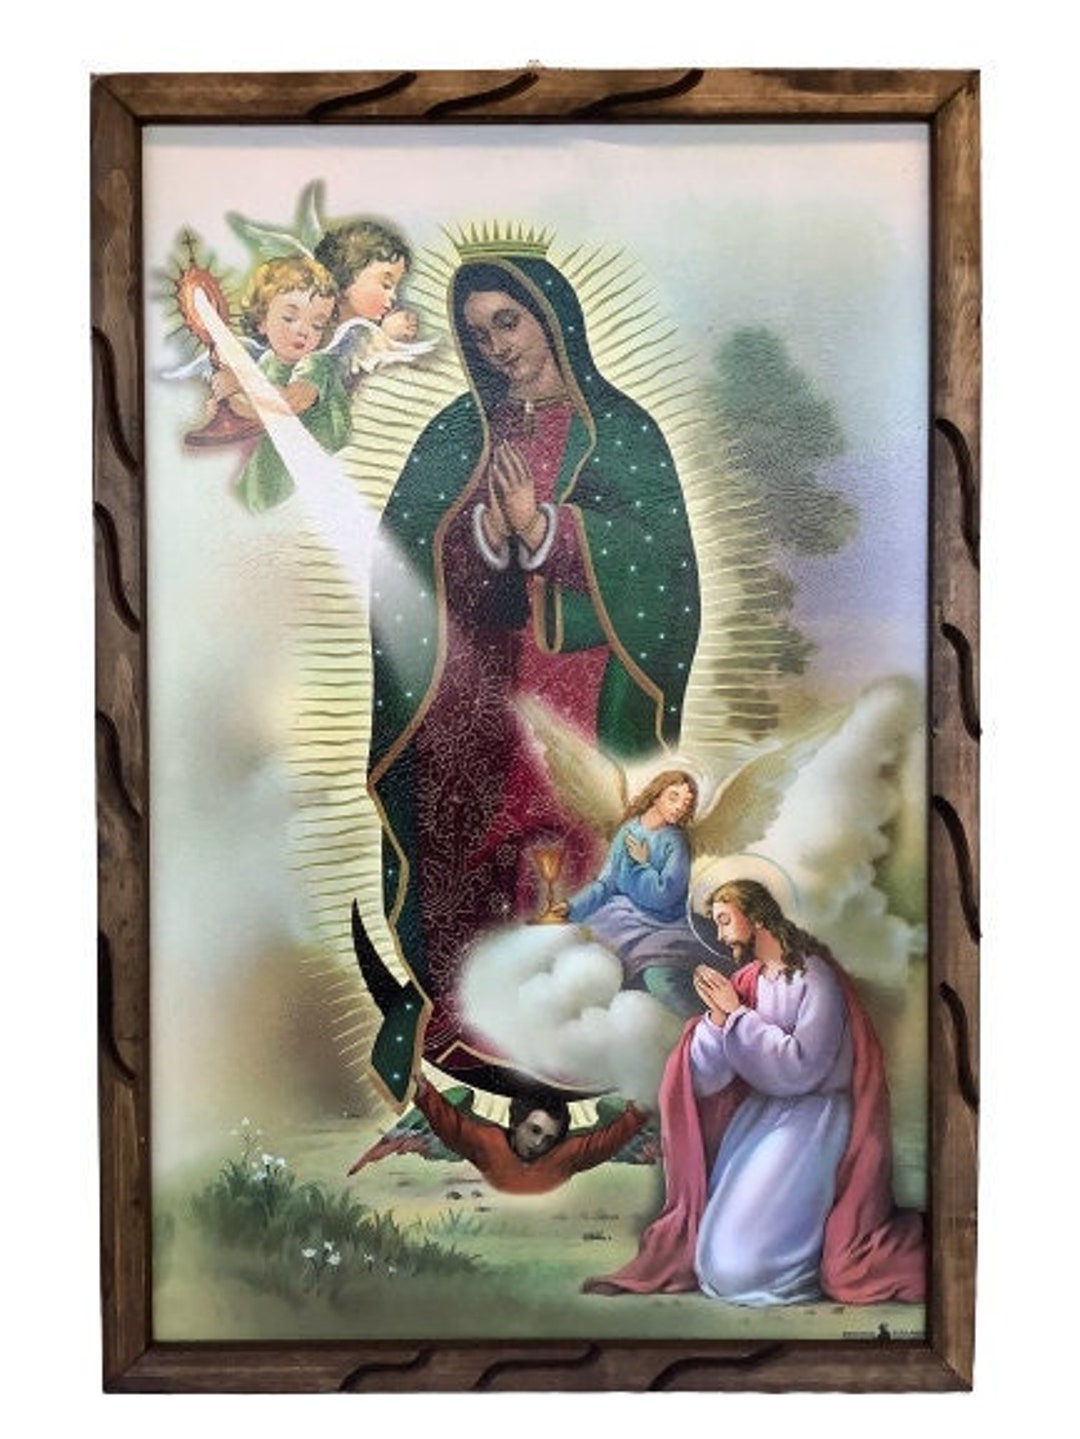 Cuadro Virgen de Guadalupe: Cuadro Virgen de Guadalupe